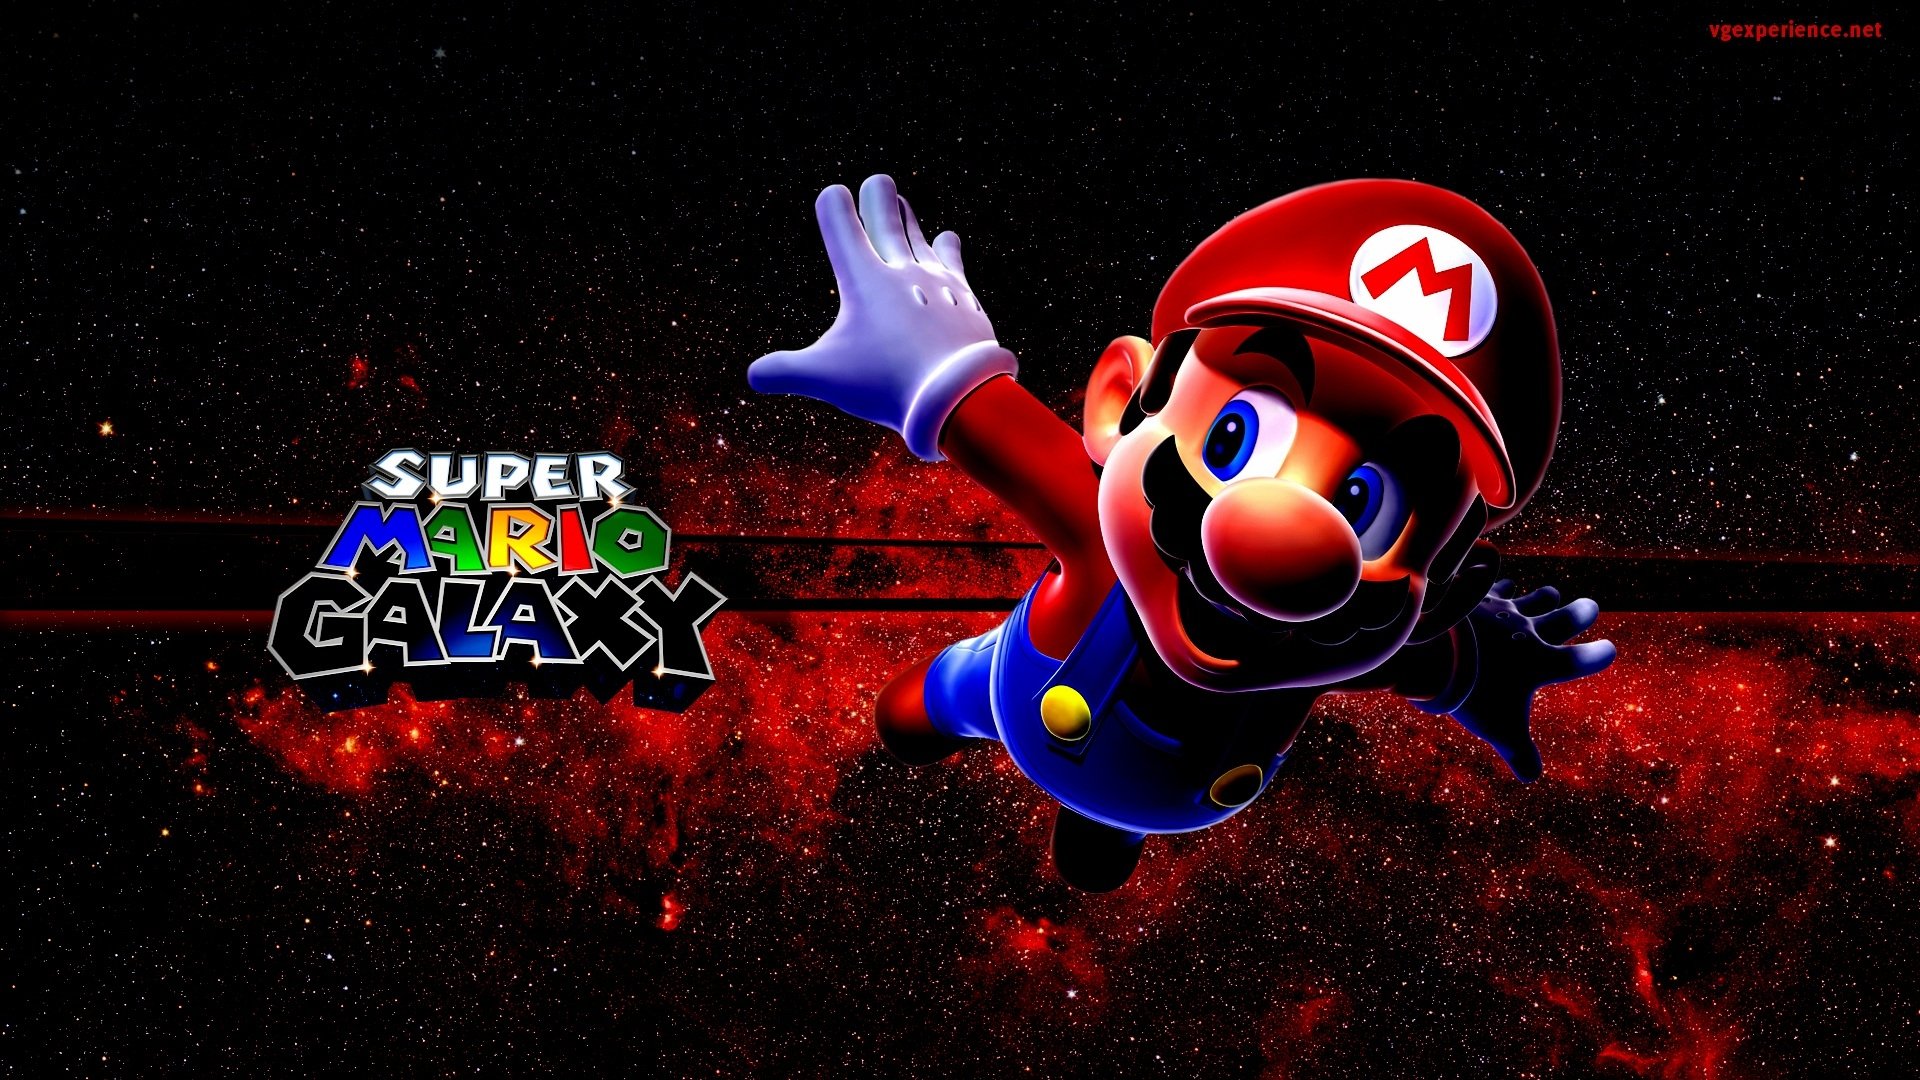 Super Mario Galaxy Hd Wallpaper Background Image 1920x1080 Id